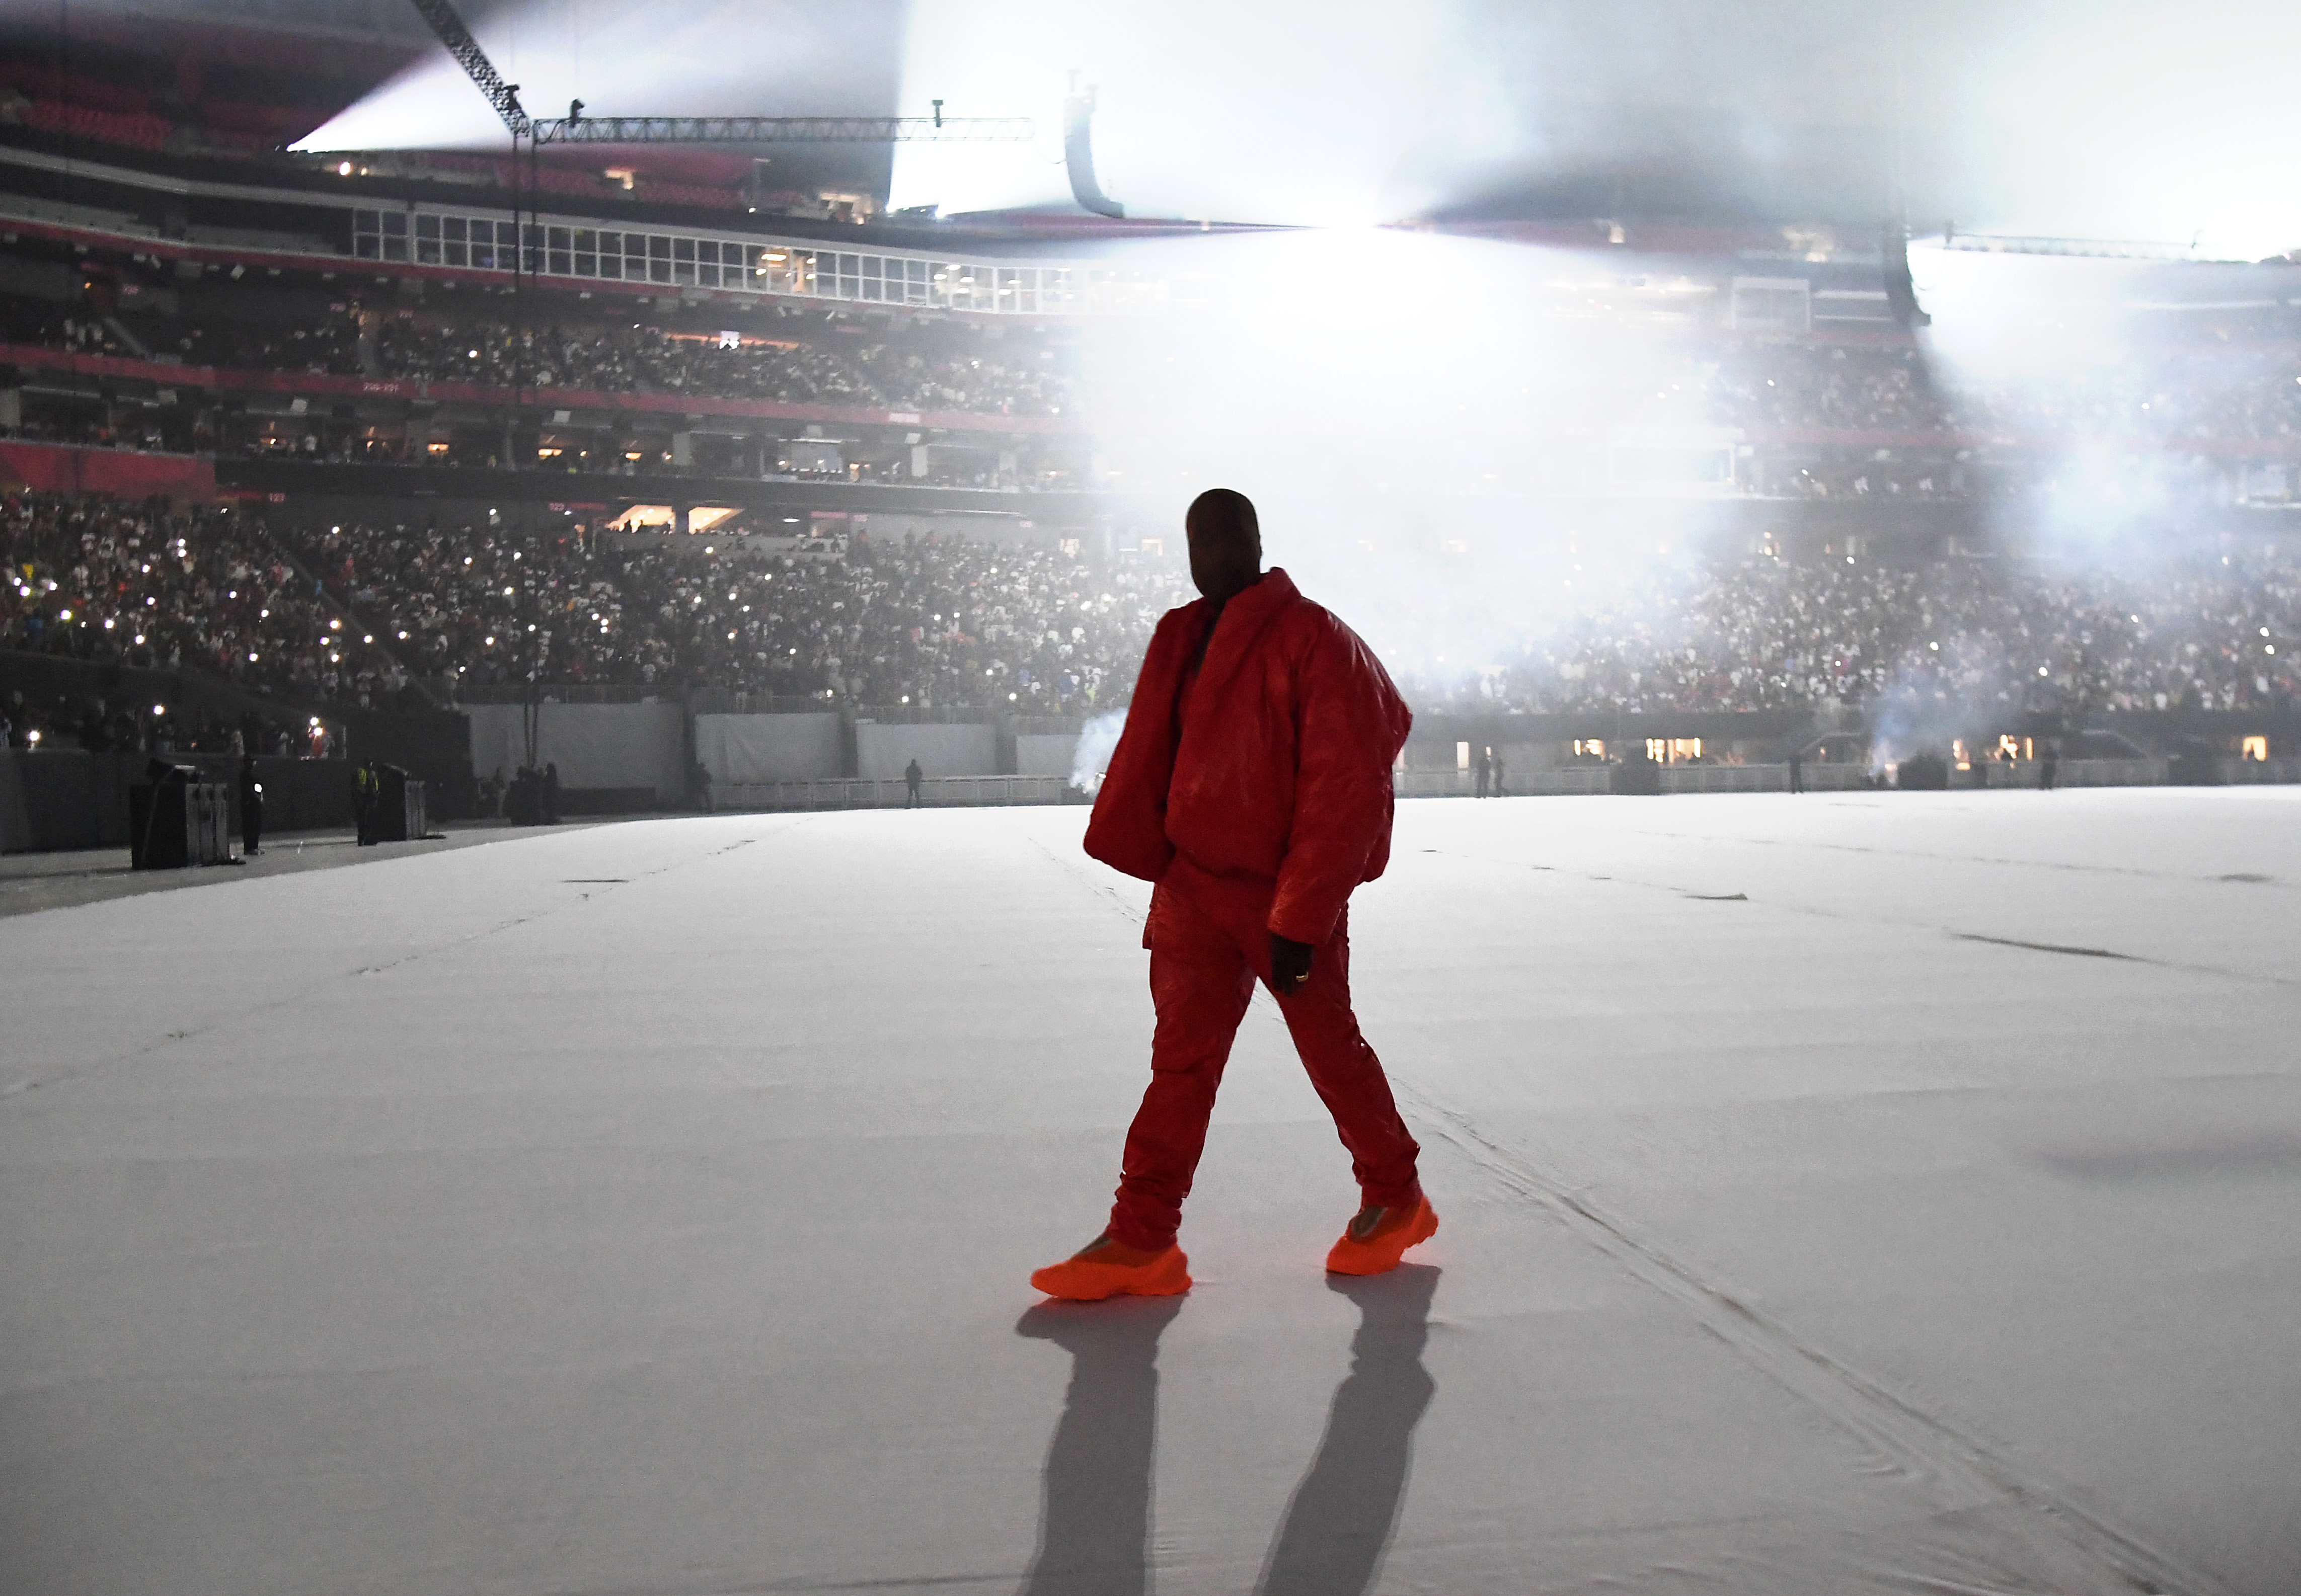 The 'Donda' Air Jordan 6 and the Real Story Behind Kanye West's